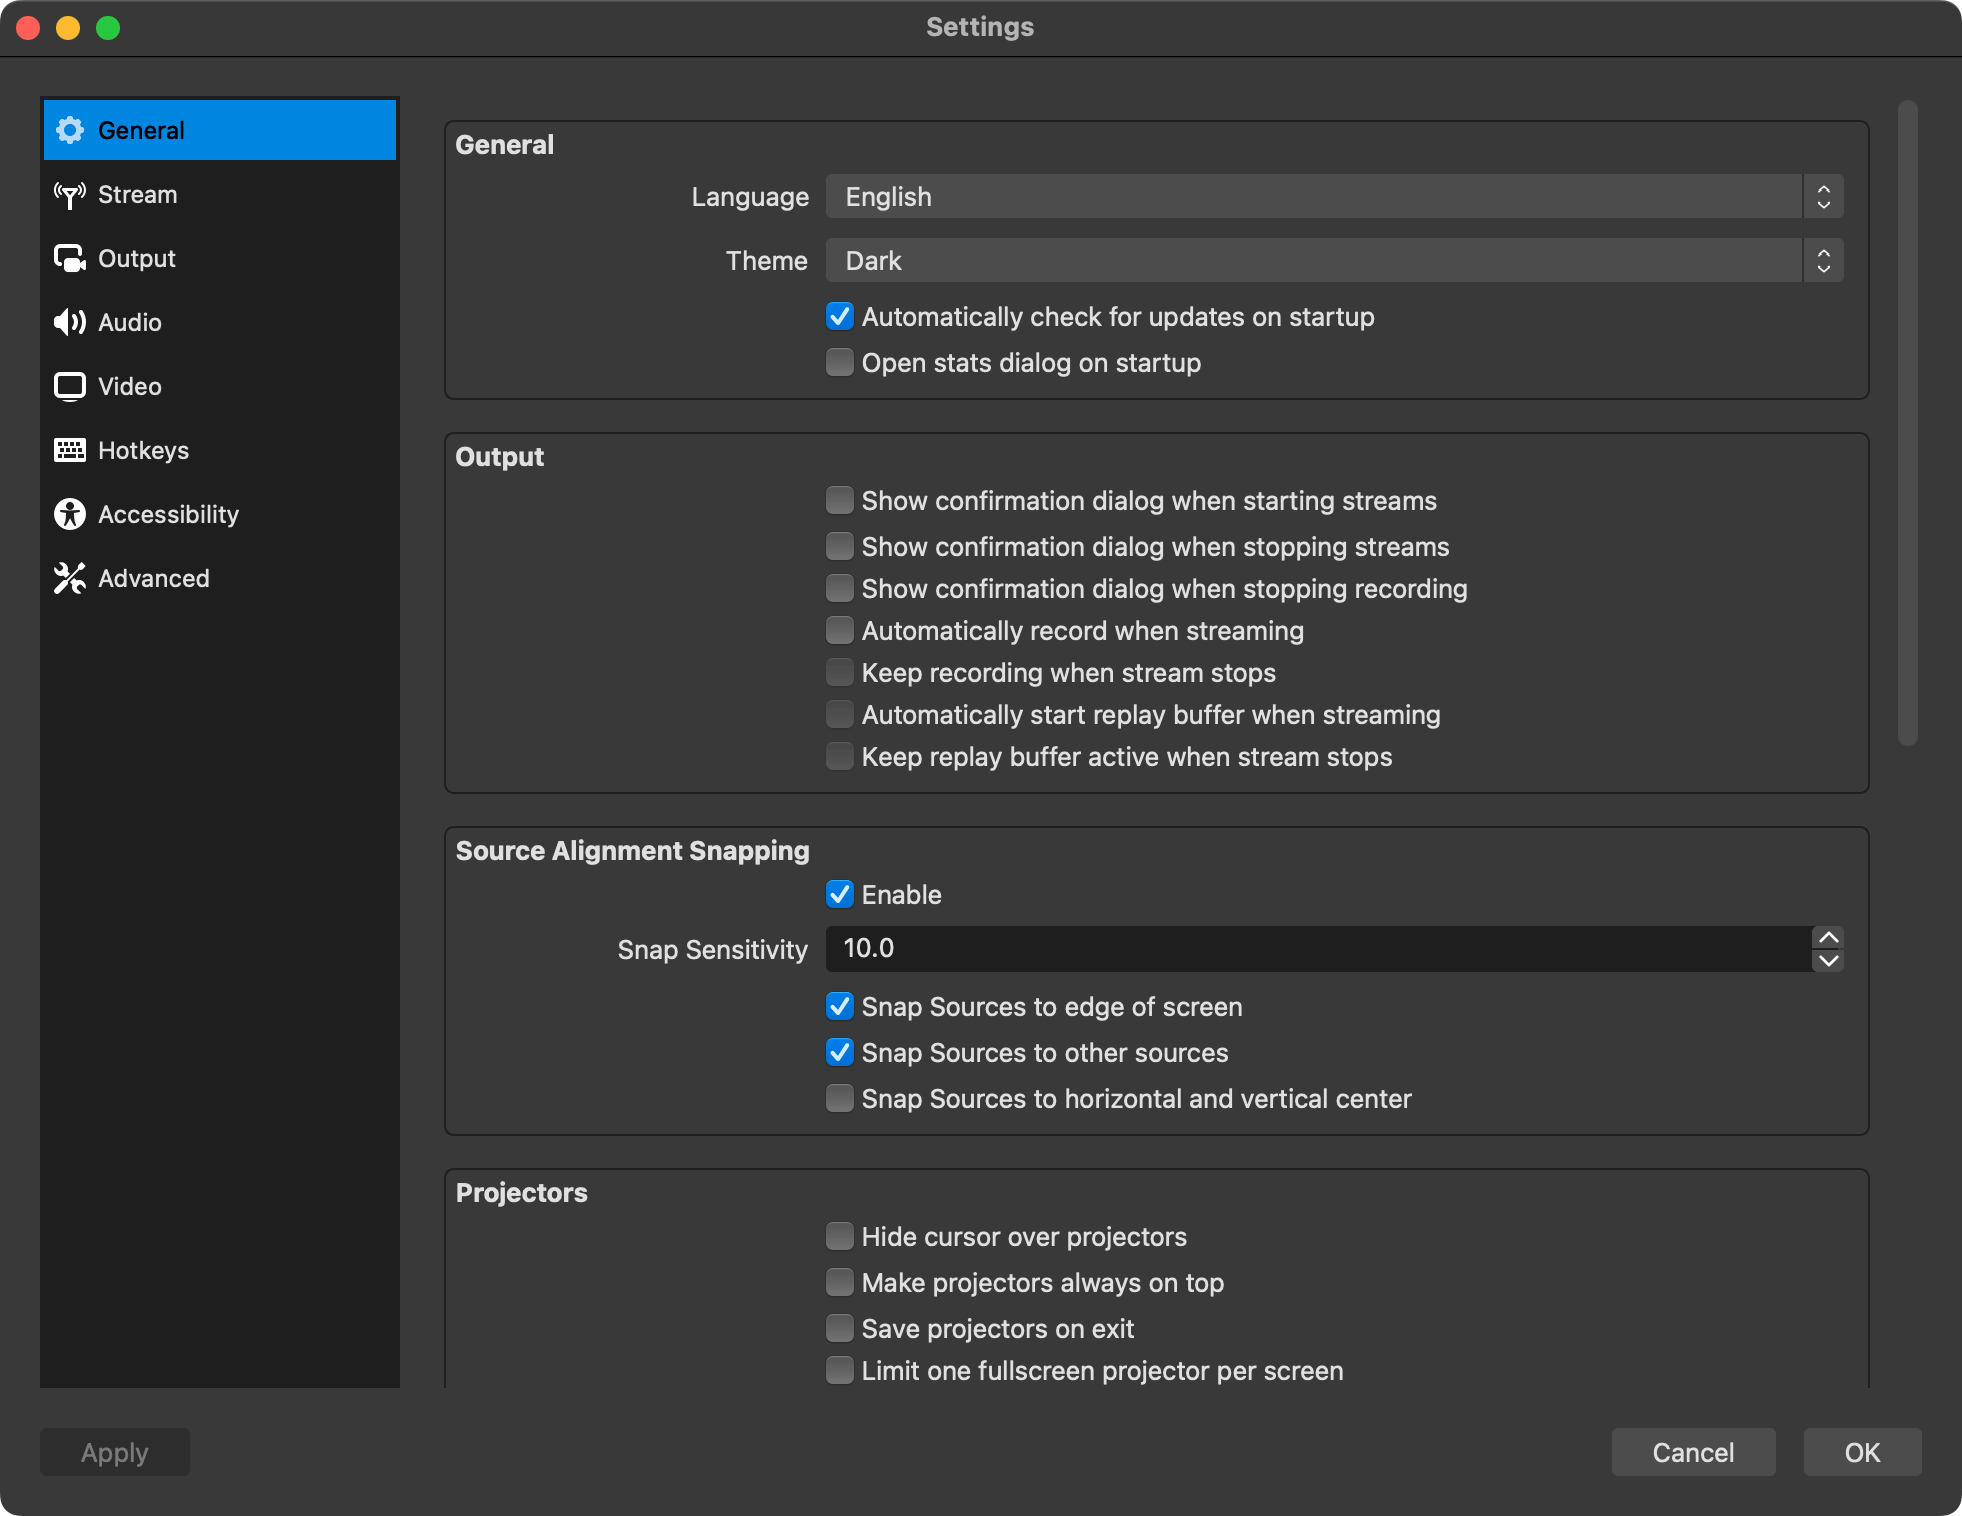 OBS Studio's settings window showing the Dark theme